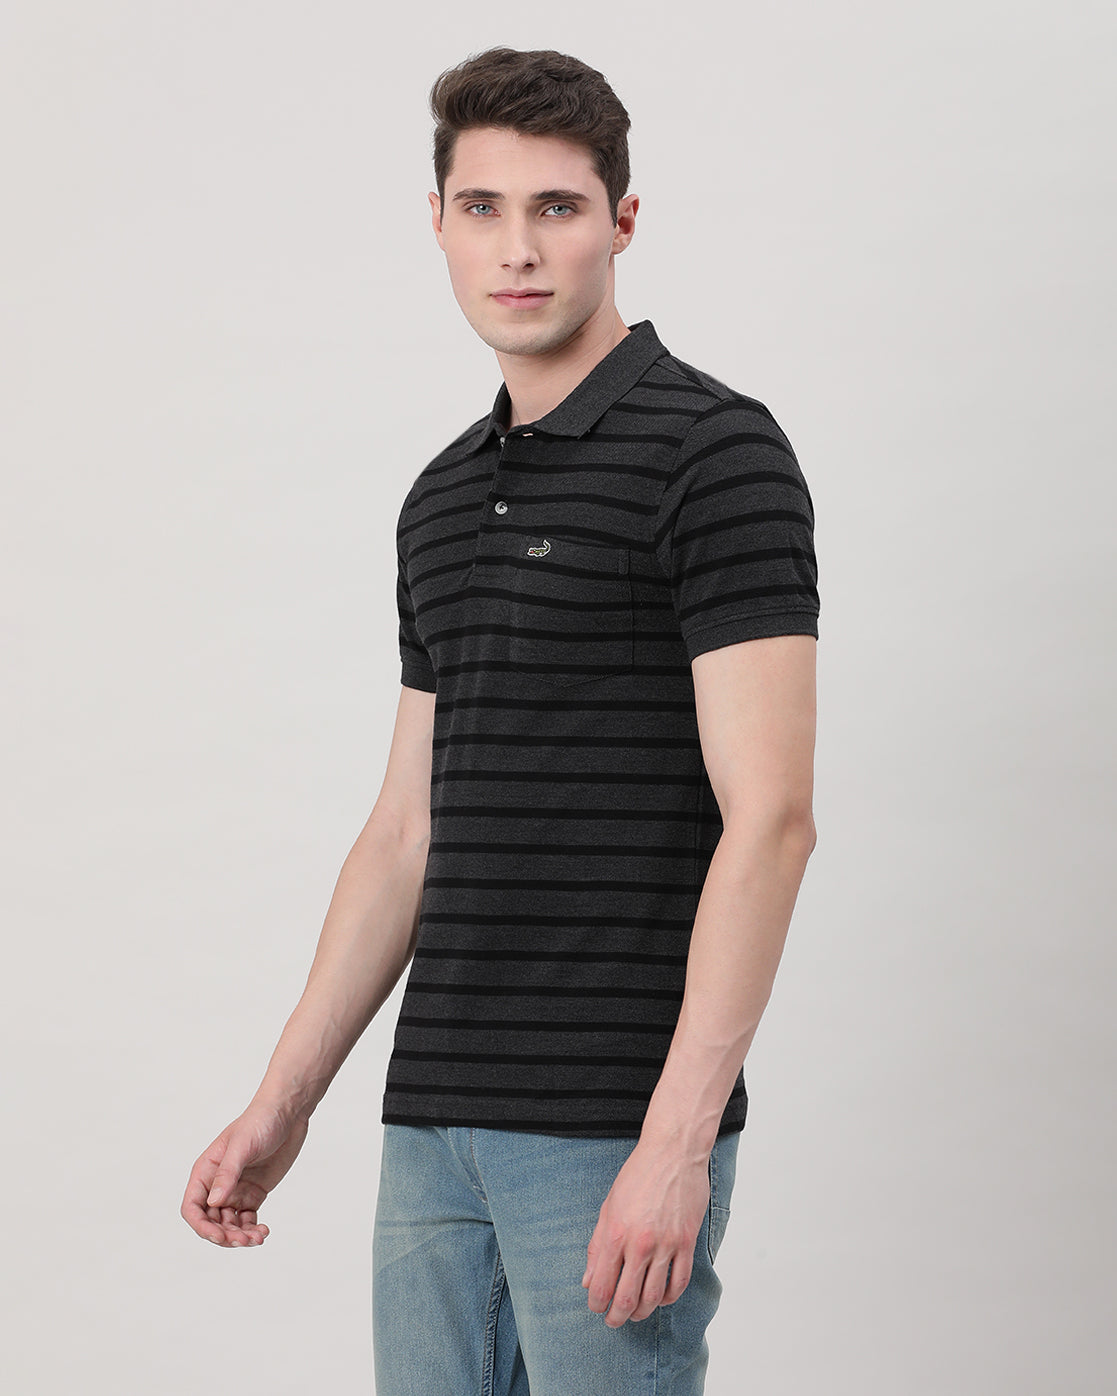 Casual Black T-Shirt Striper Half Sleeve Slim Fit with Collar